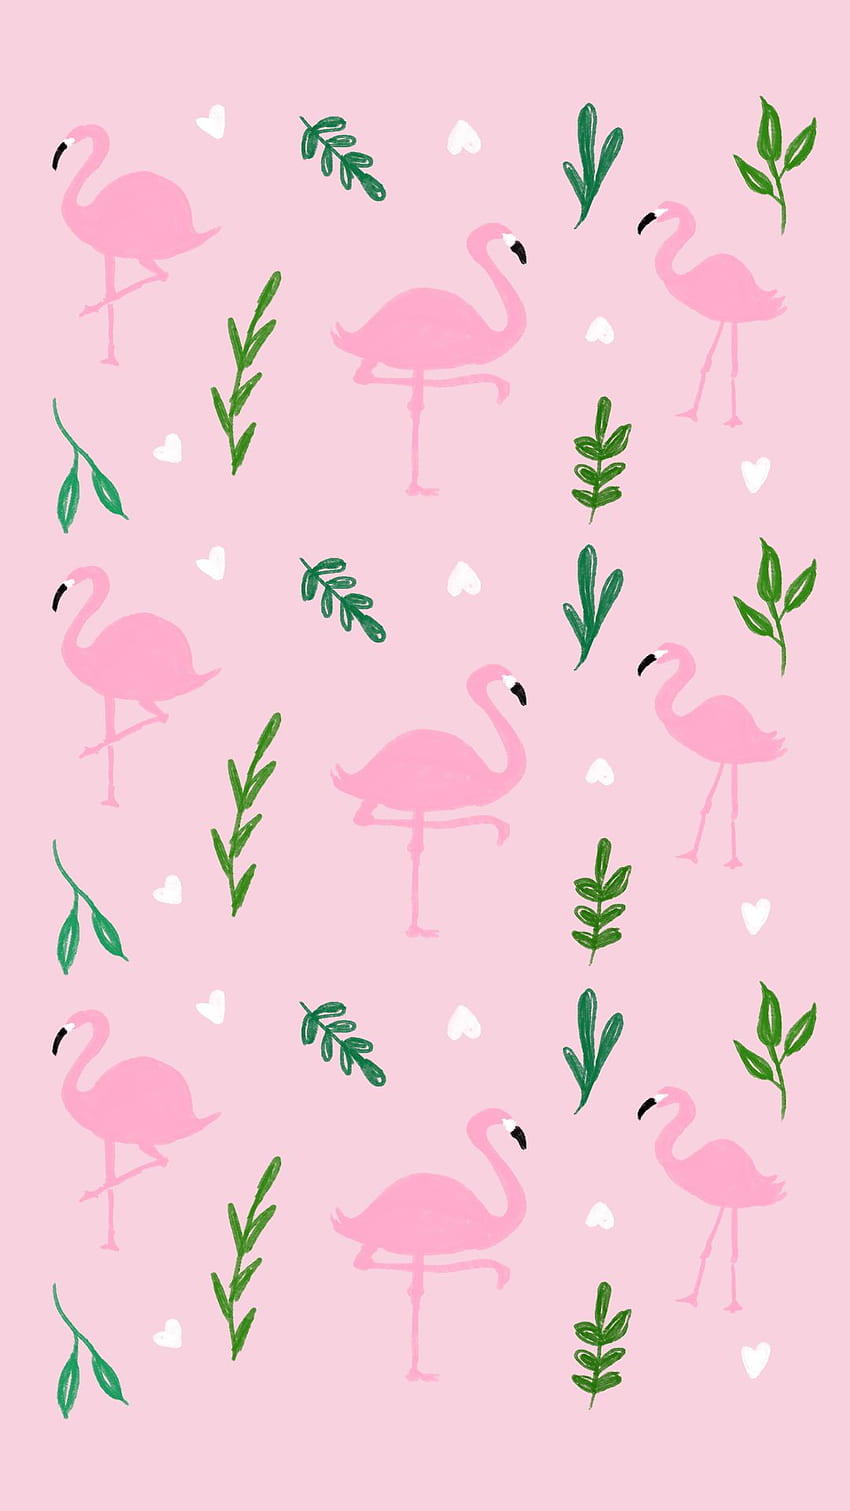 Amoled wallpaper  Flamingo neon pink  Pink neon wallpaper Iphone  wallpaper fall Iphone wallpaper landscape